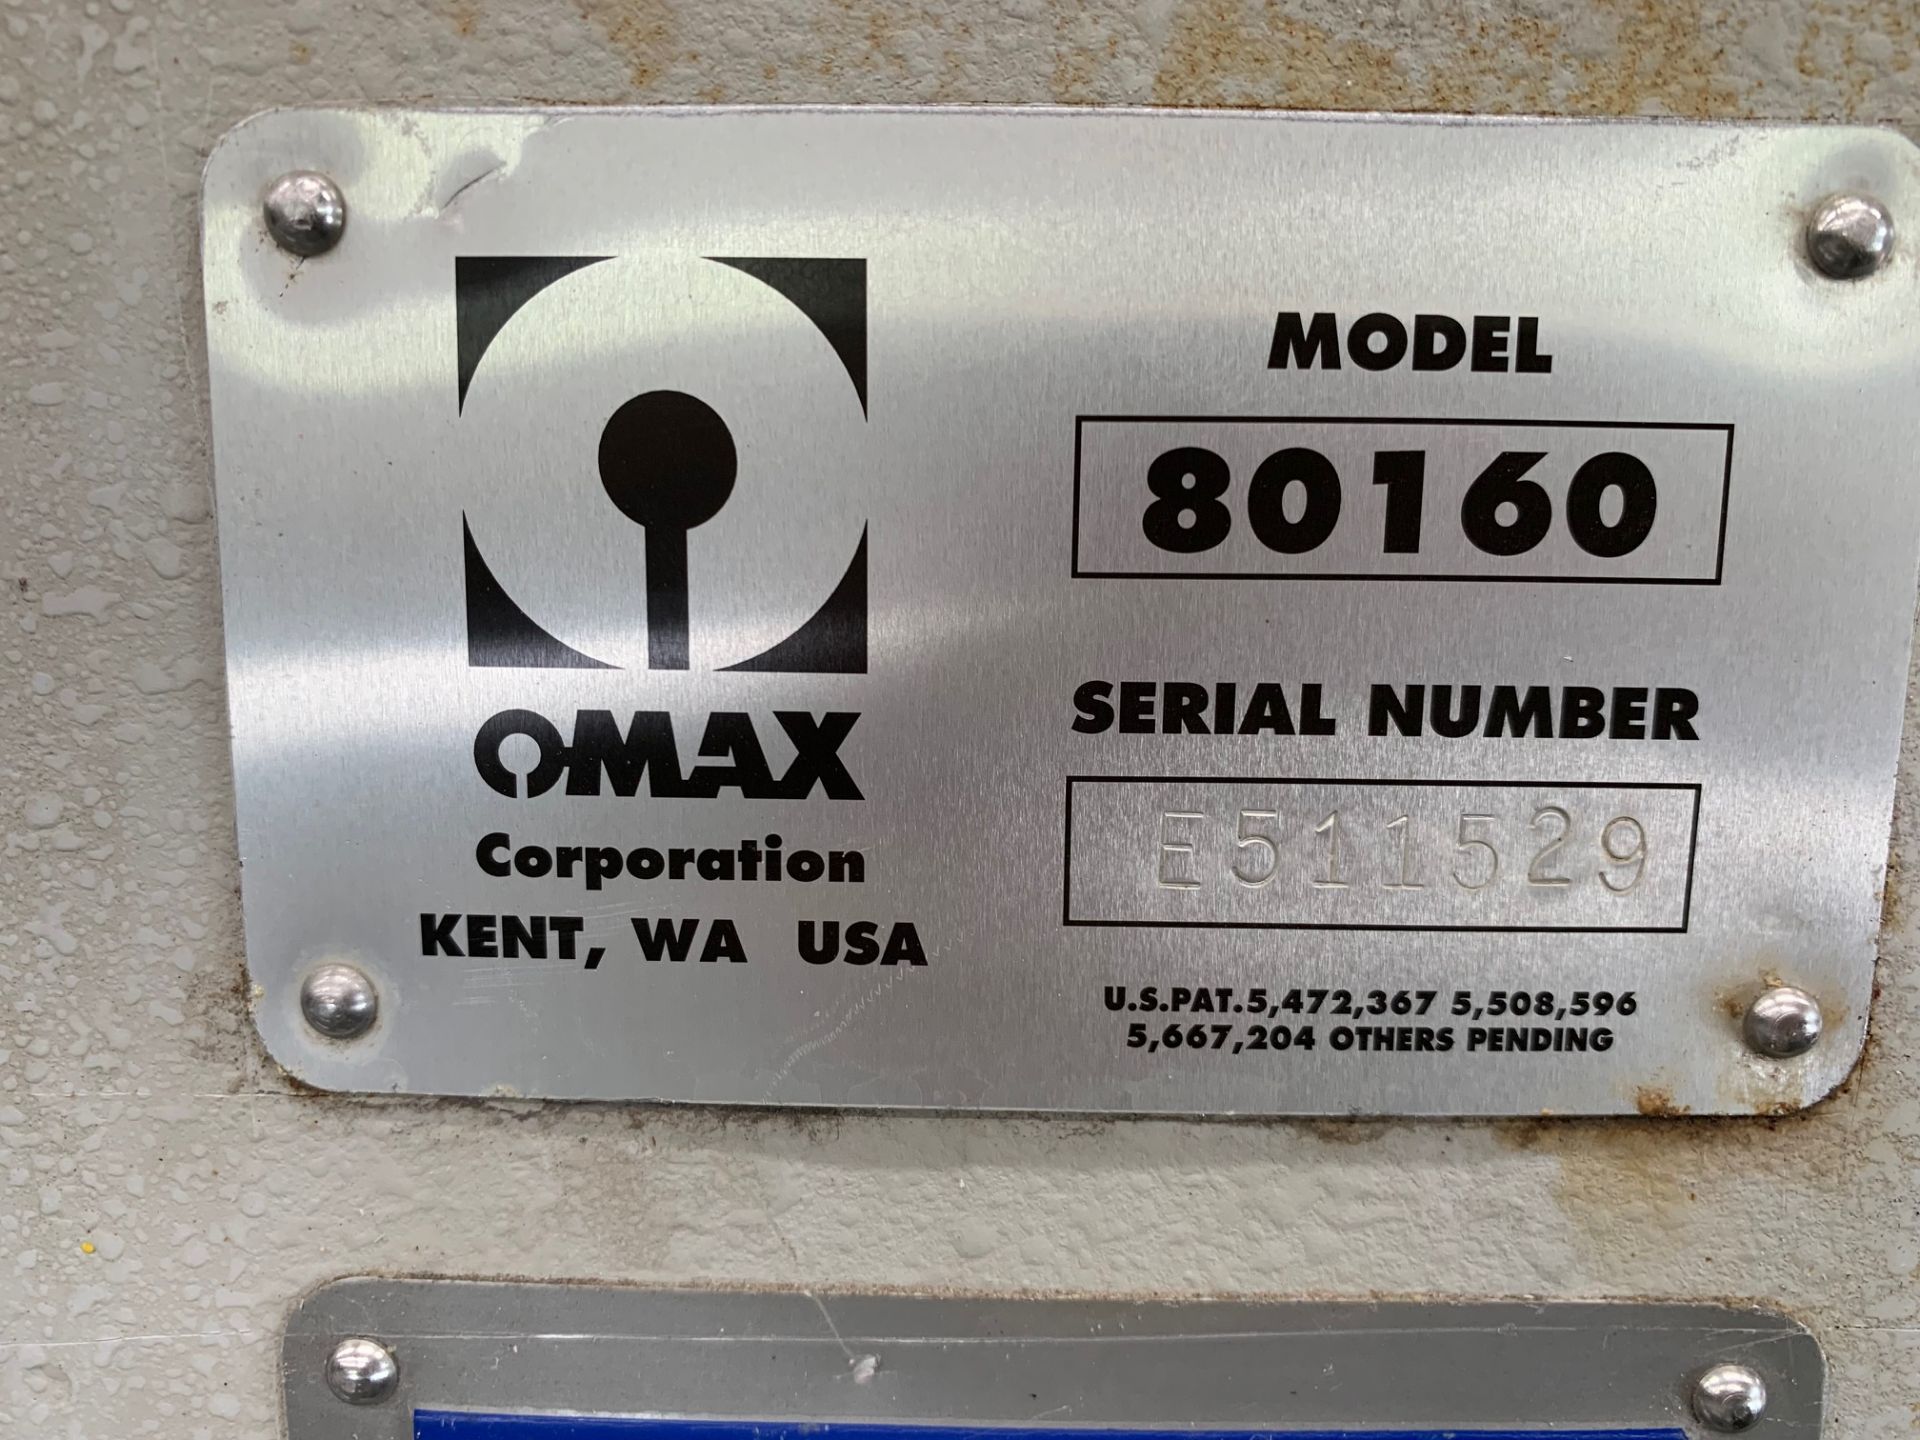 2004 OMAX 80160 JET MACHINING CENTER TILT-A-JET CNC WATERJET, S/N E511529 - Image 25 of 29